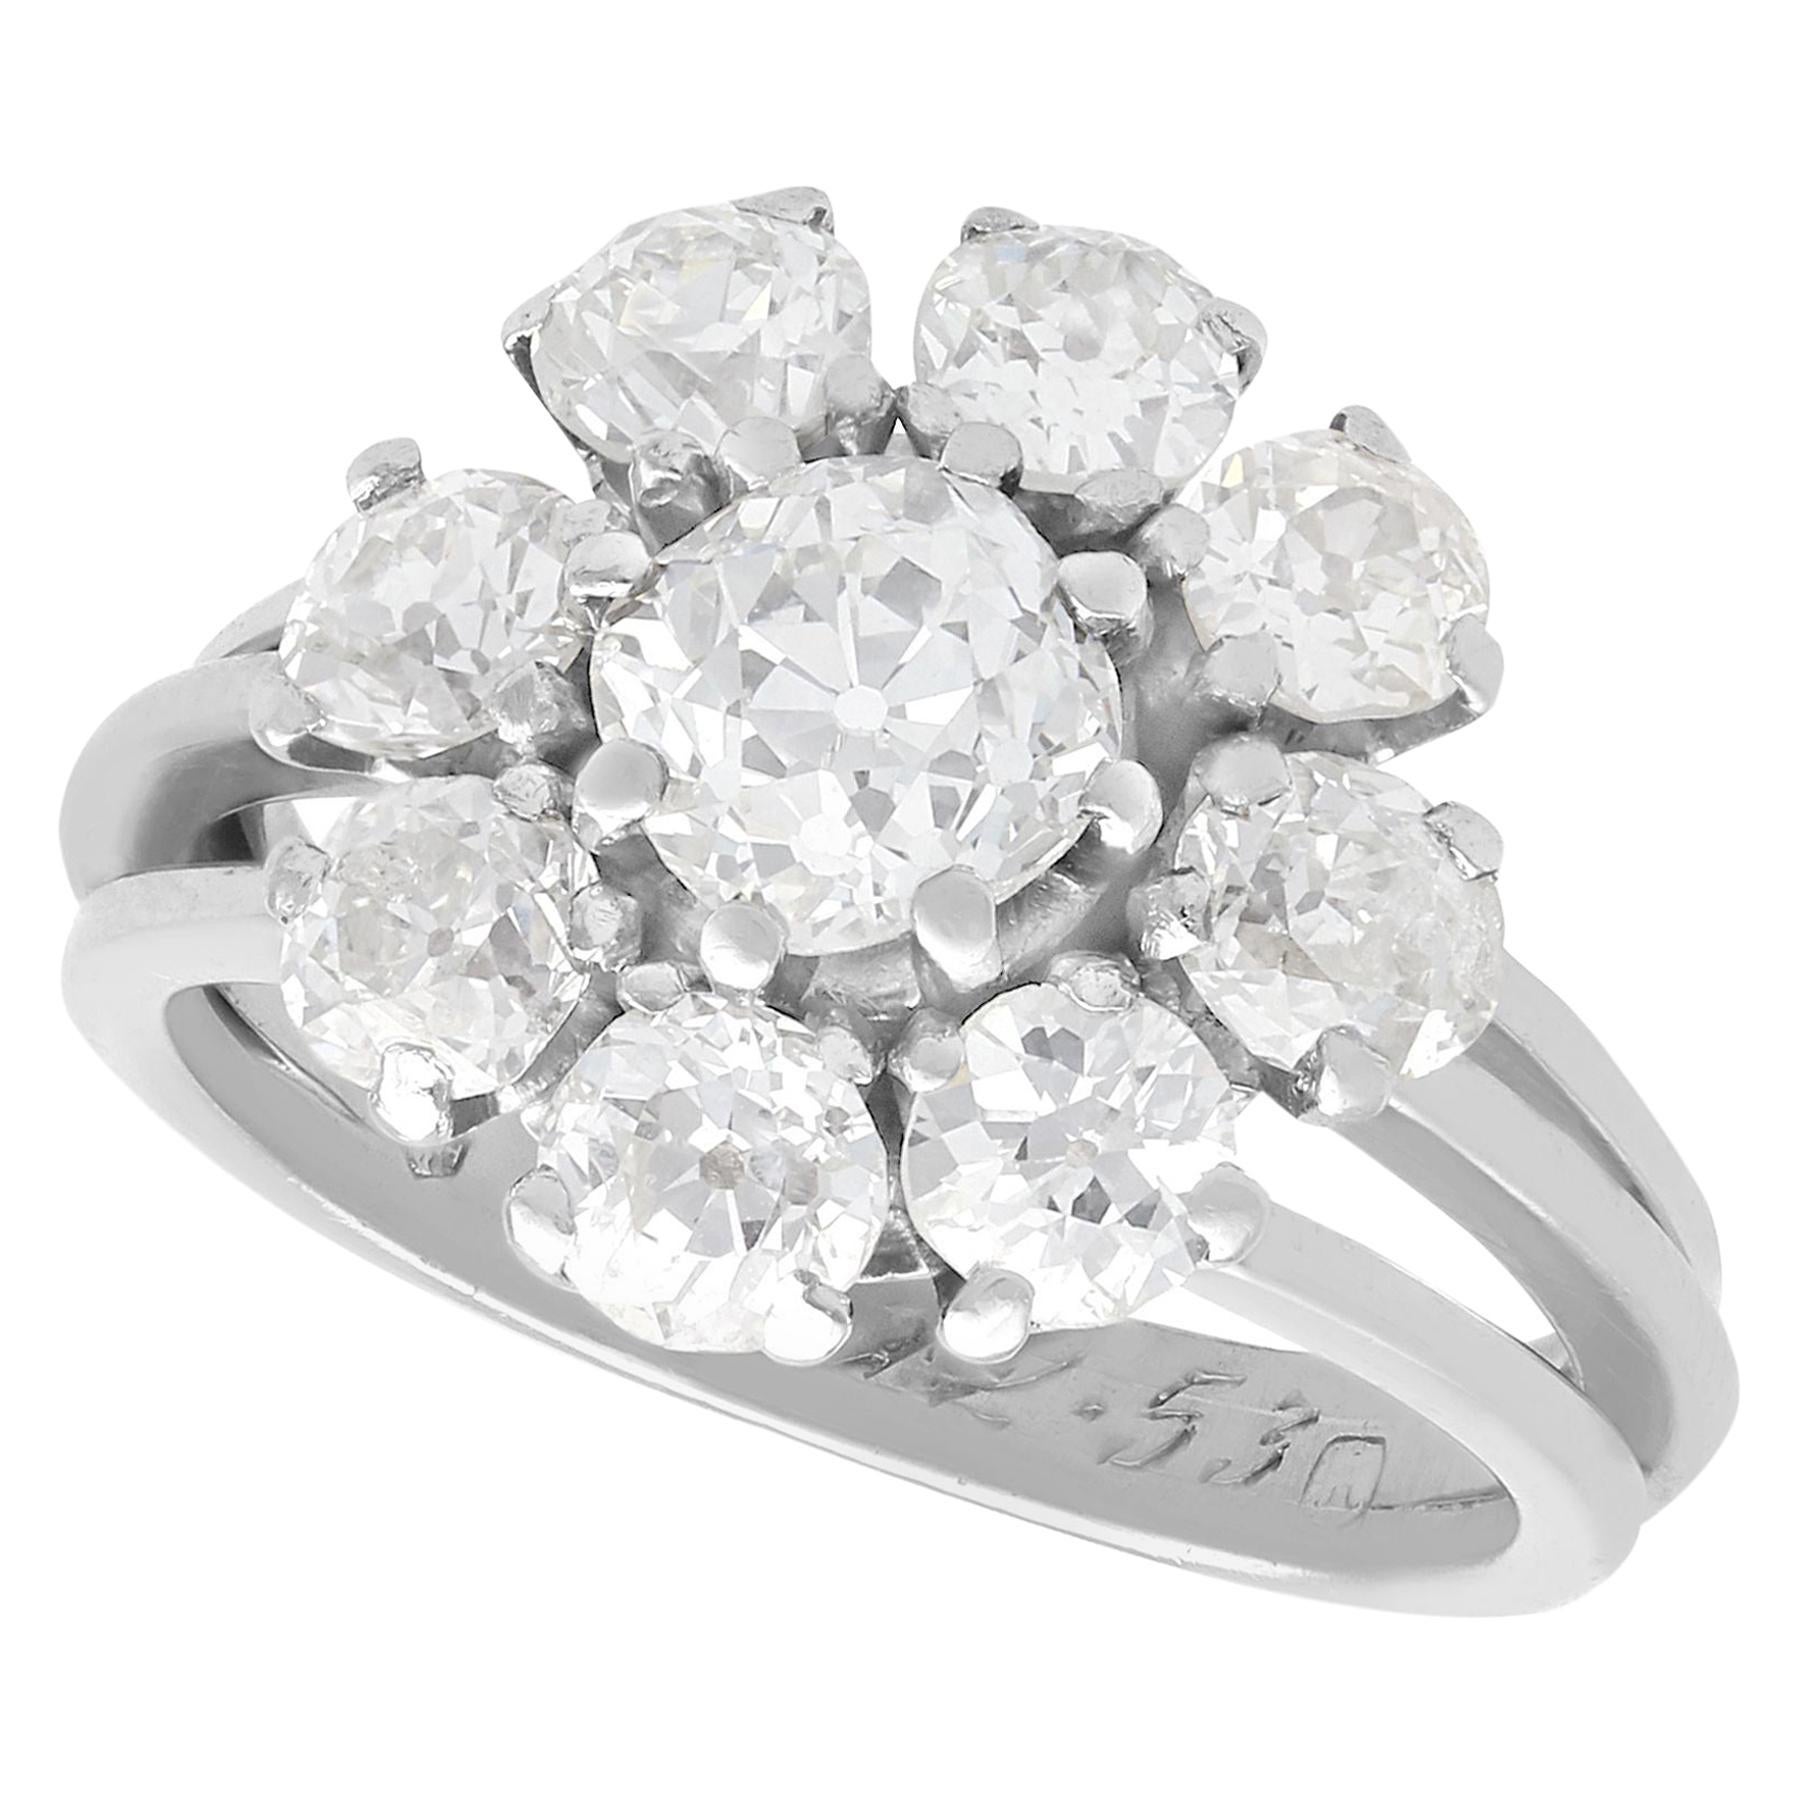 3.05 Carat Diamond and Palladium Engagement Ring